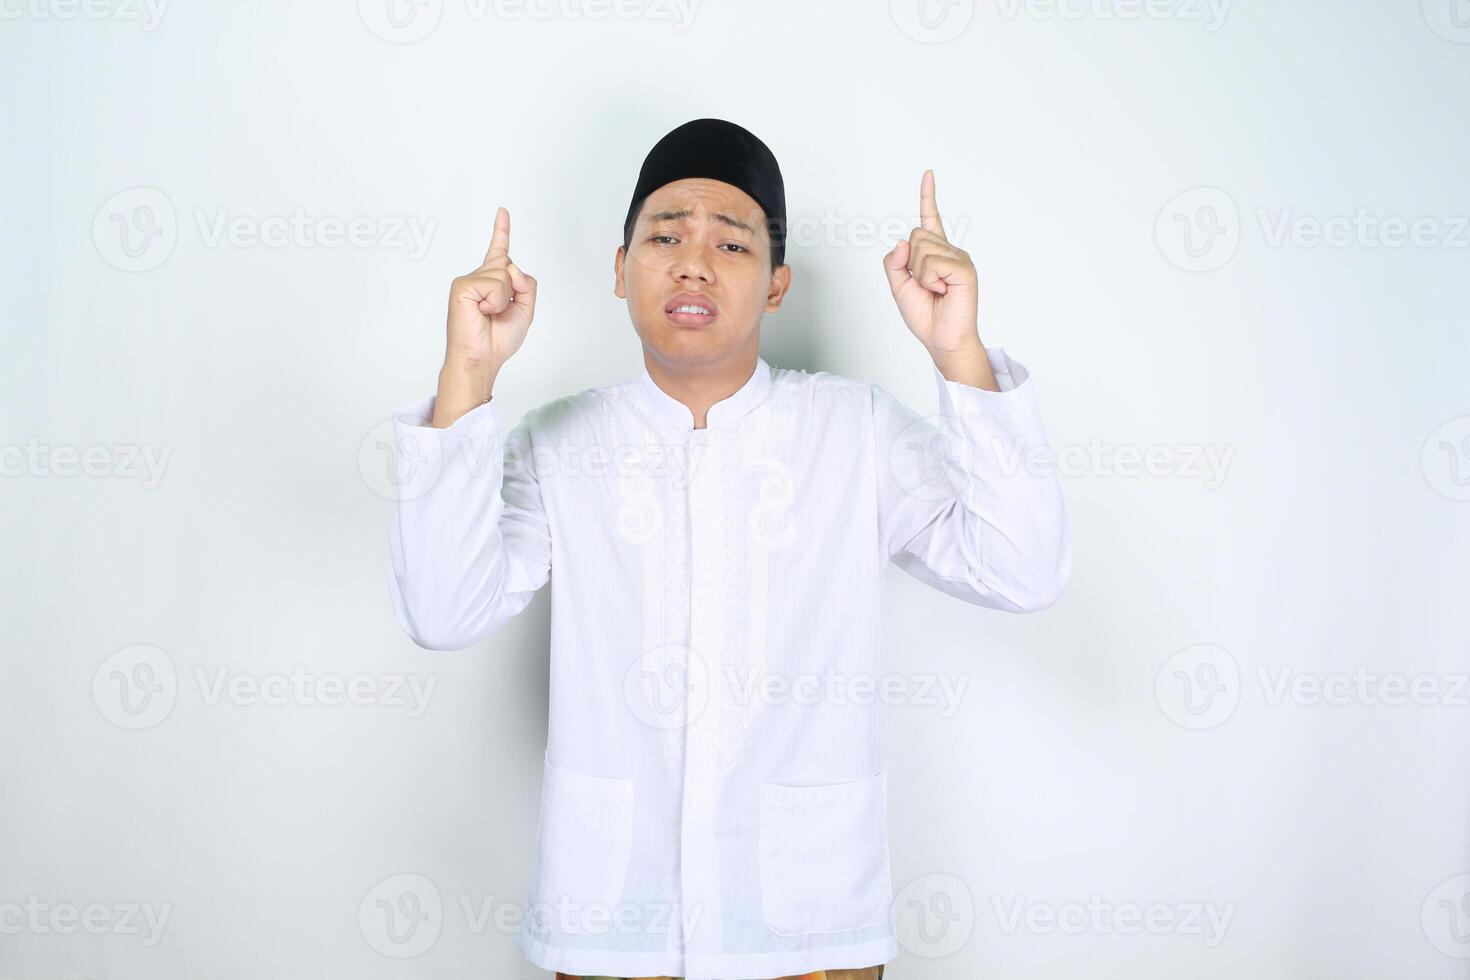 estresado musulmán hombre asiático señalando a encima con triste expresión aislado en blanco antecedentes foto